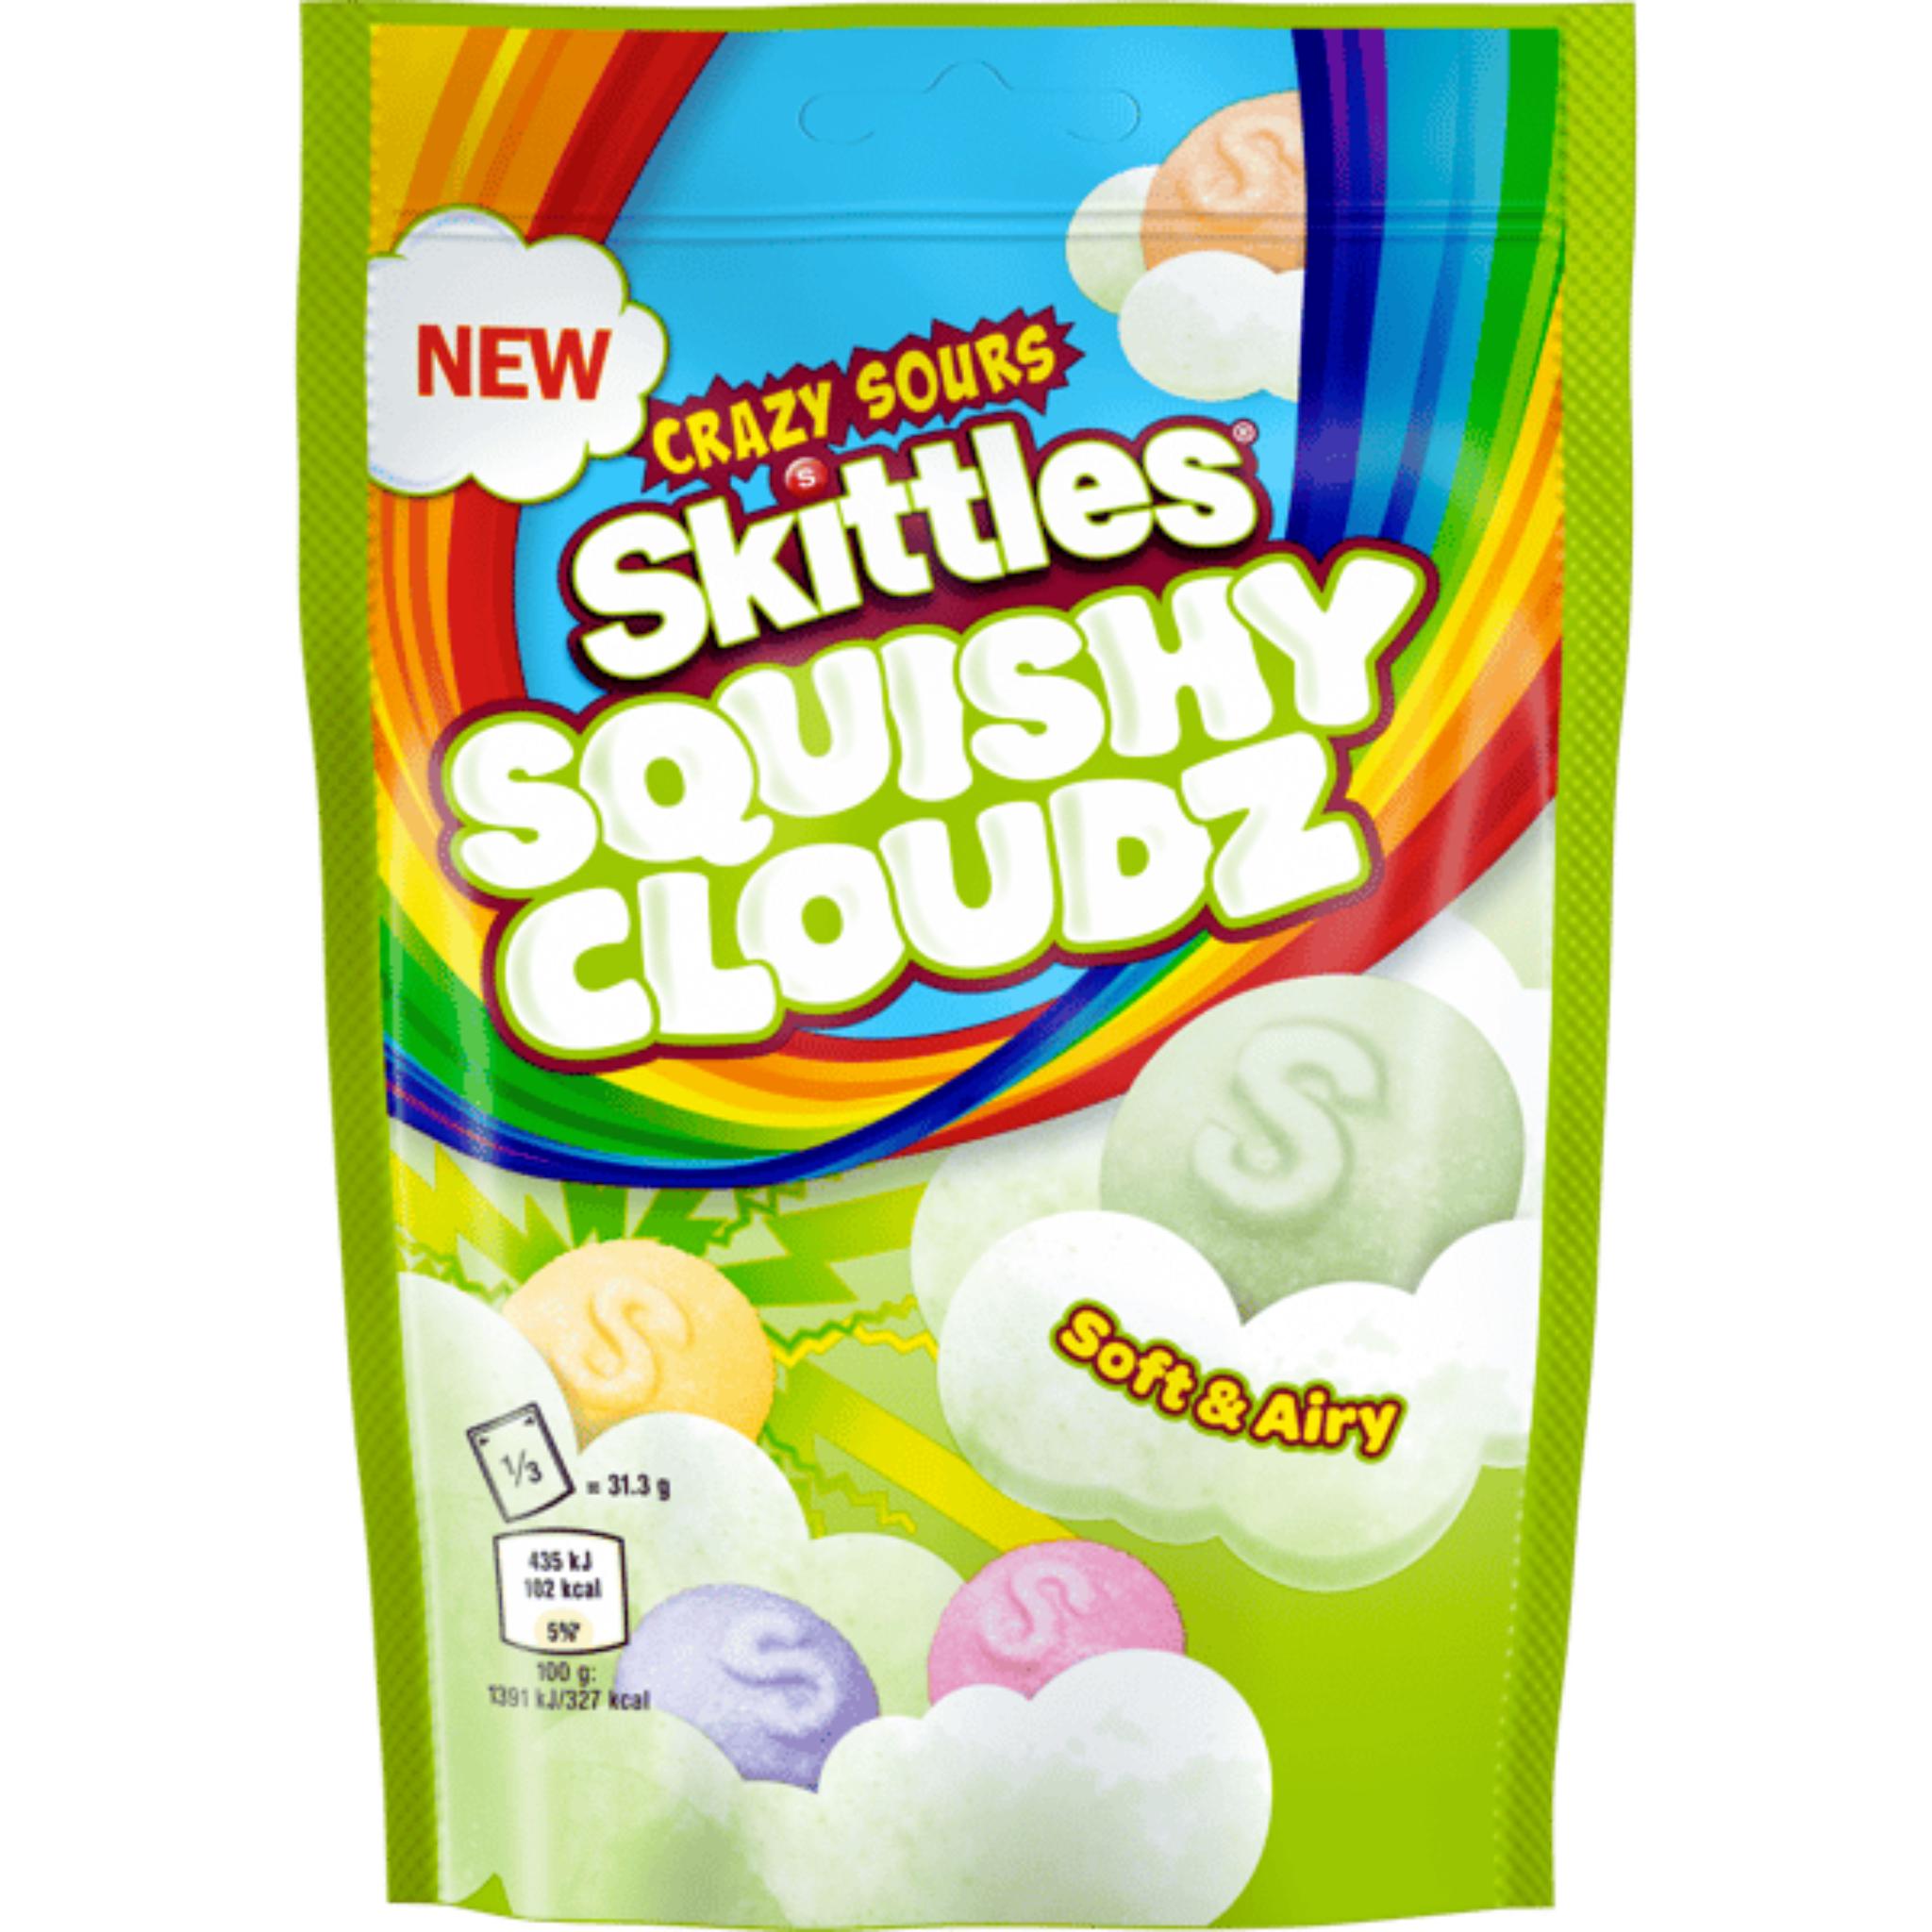 Skittles Squishy Cloudz Crazy Sours - 94g